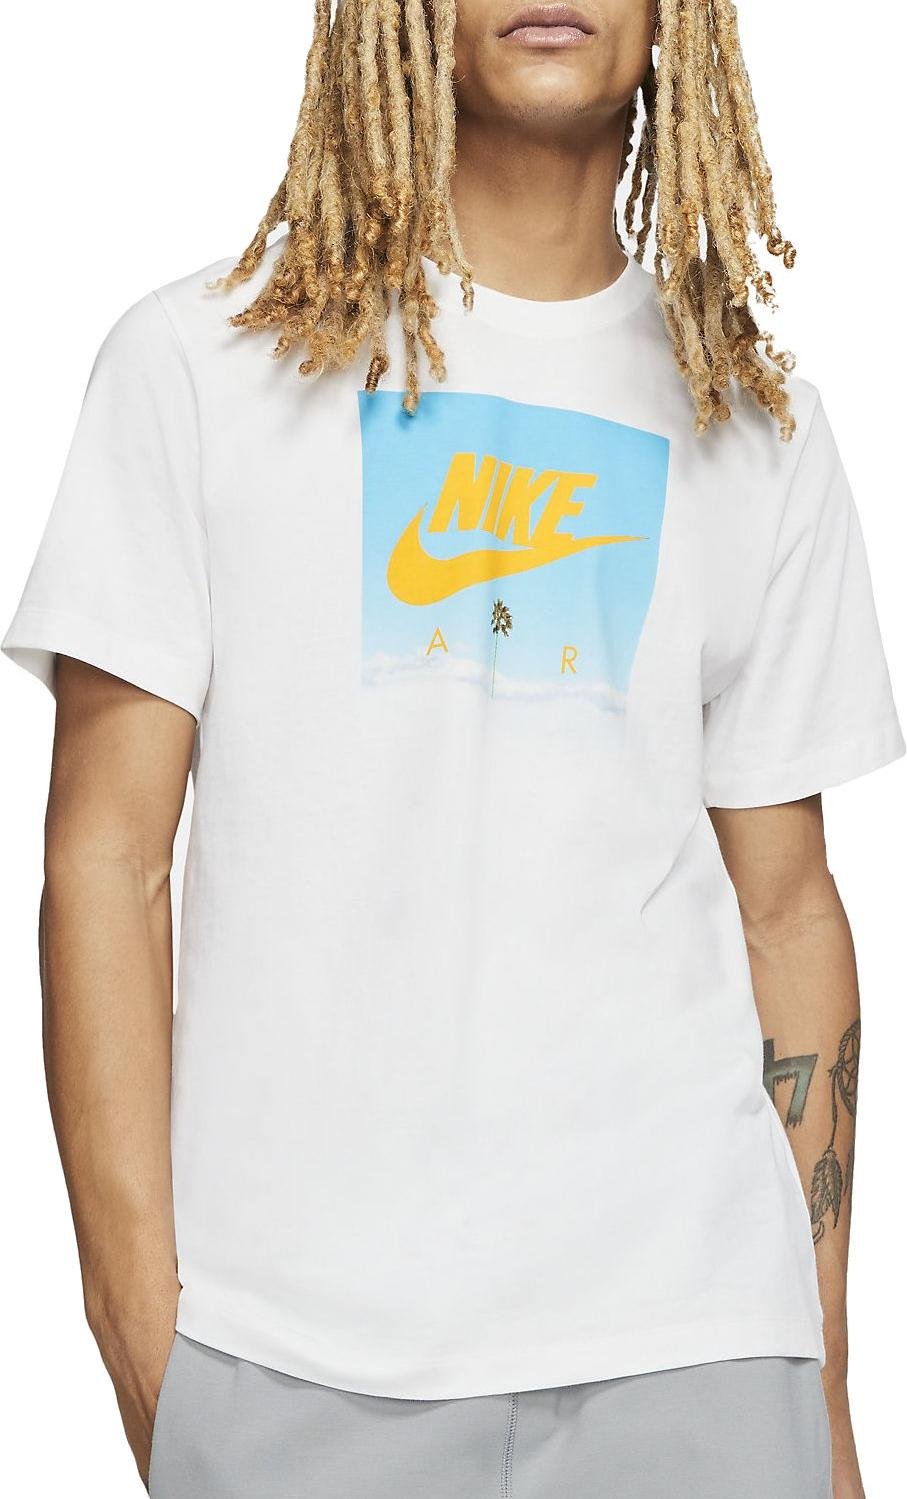 Tee-shirt Nike M NSW PHOTO TEE